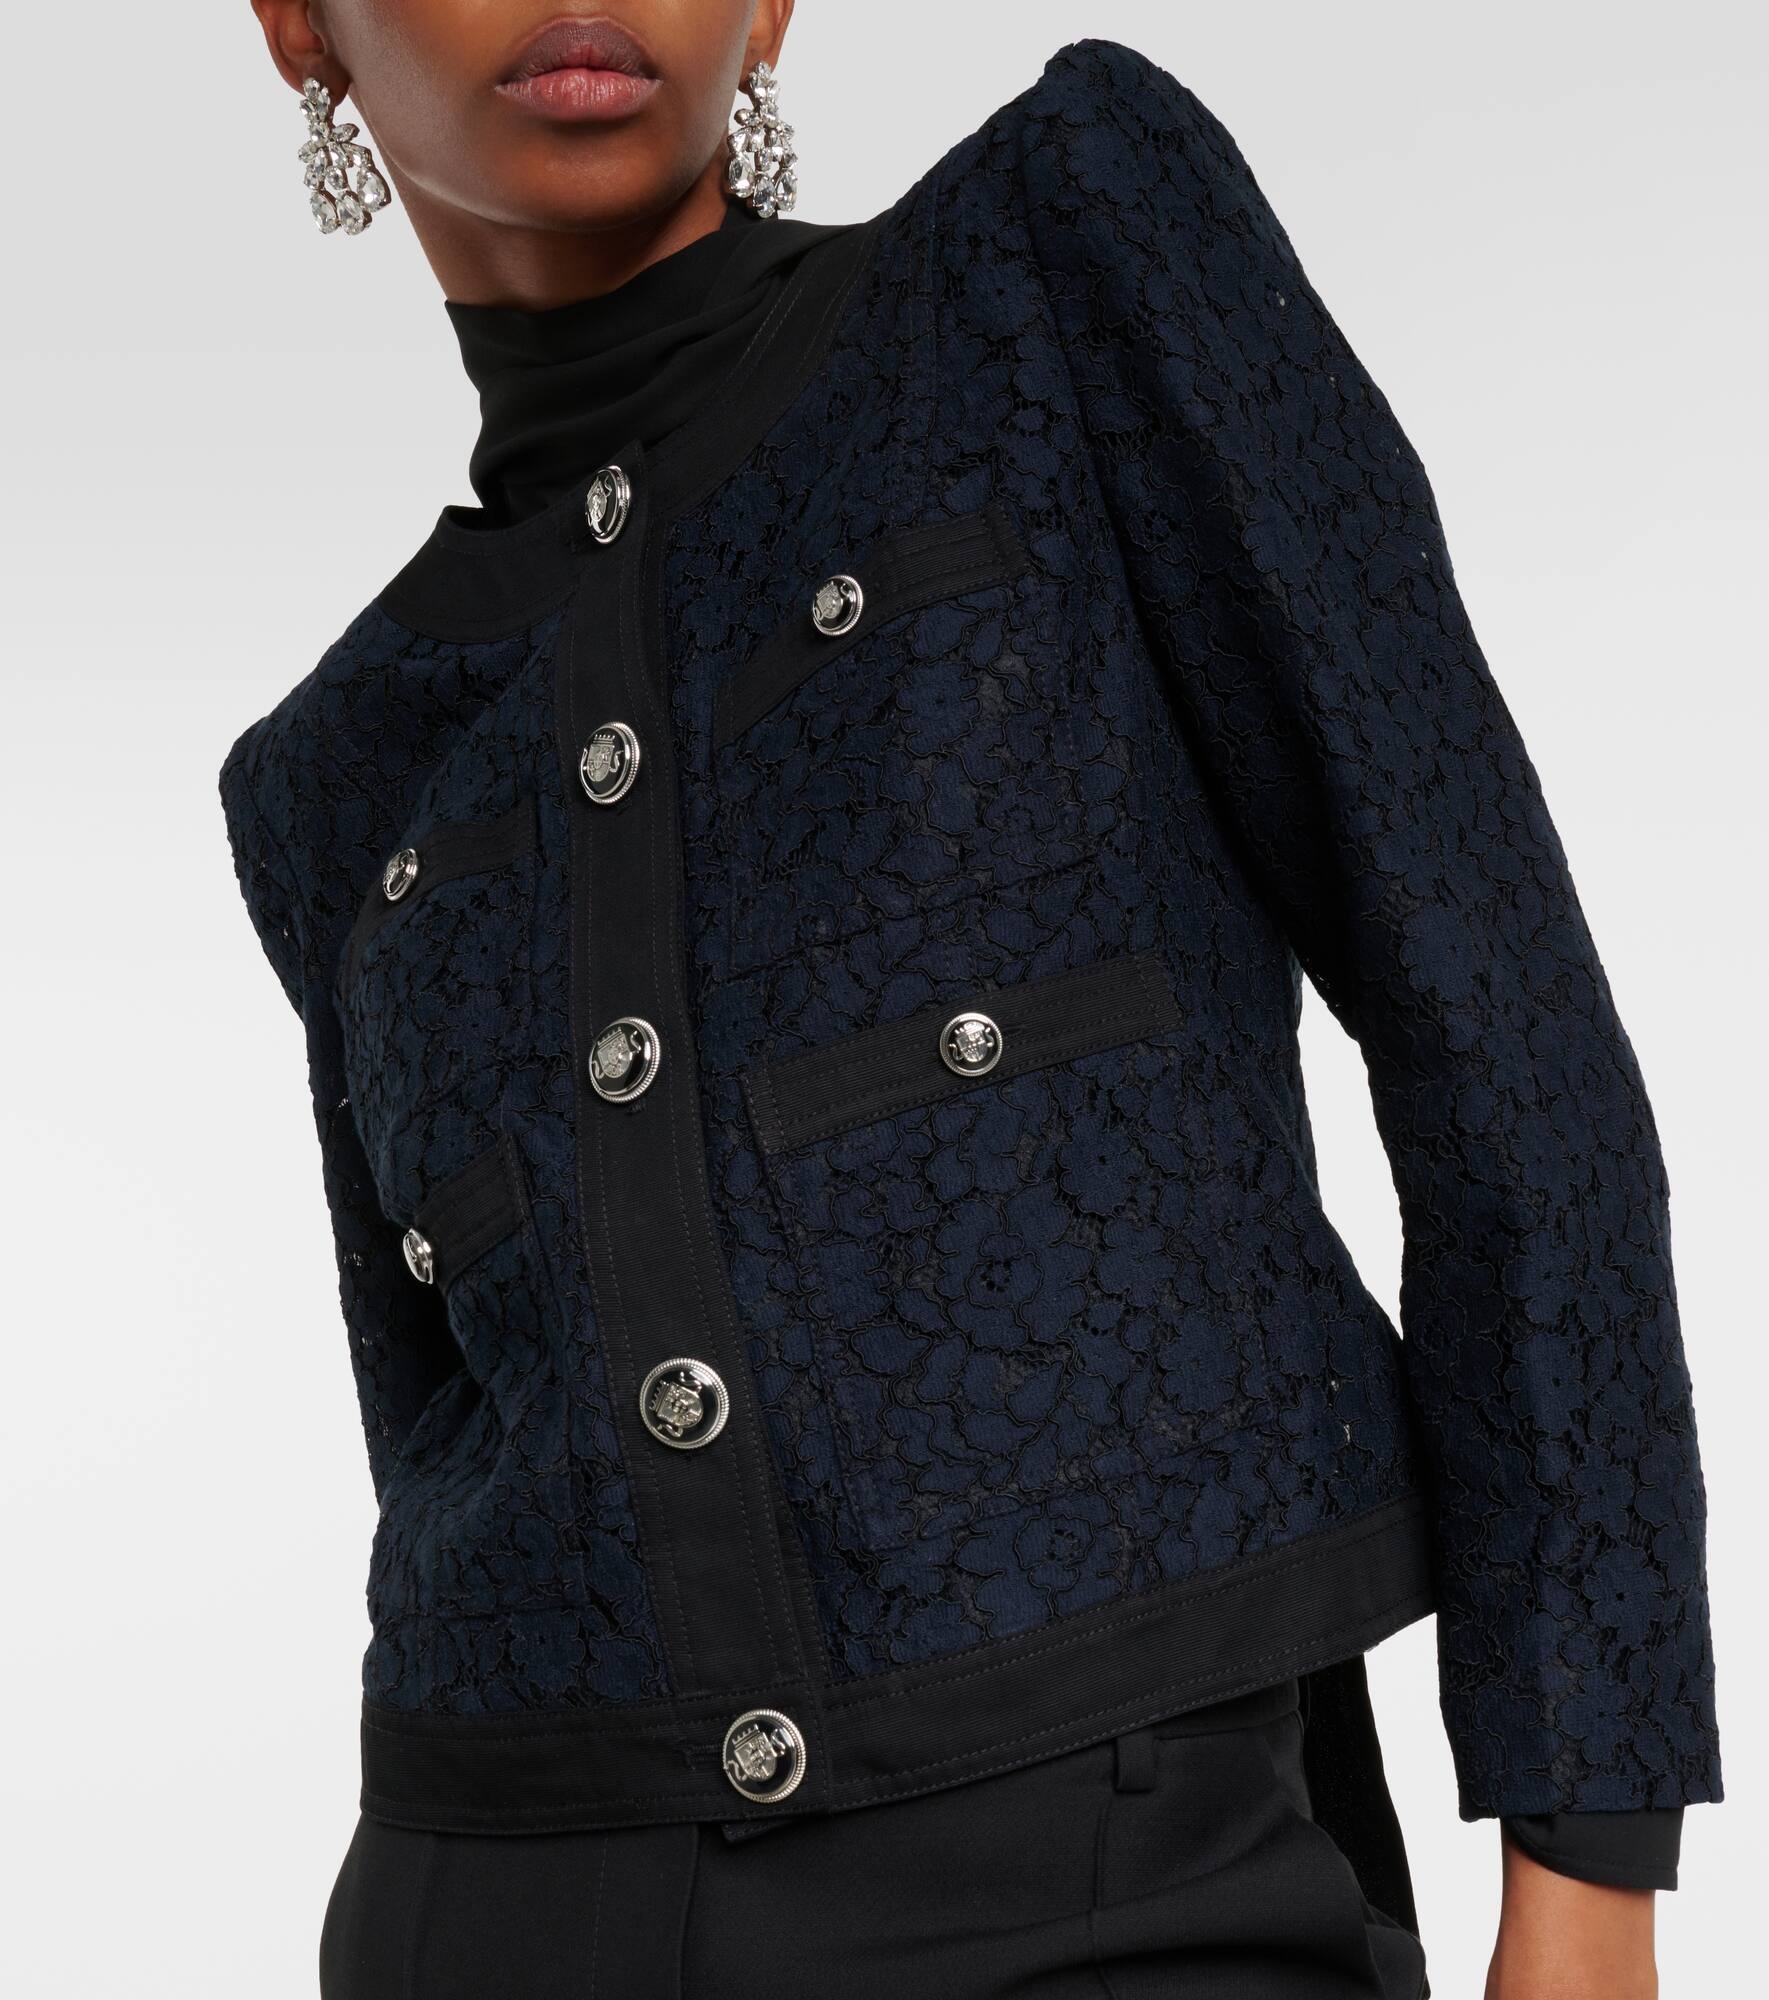 Ferazia lace jacket - 5